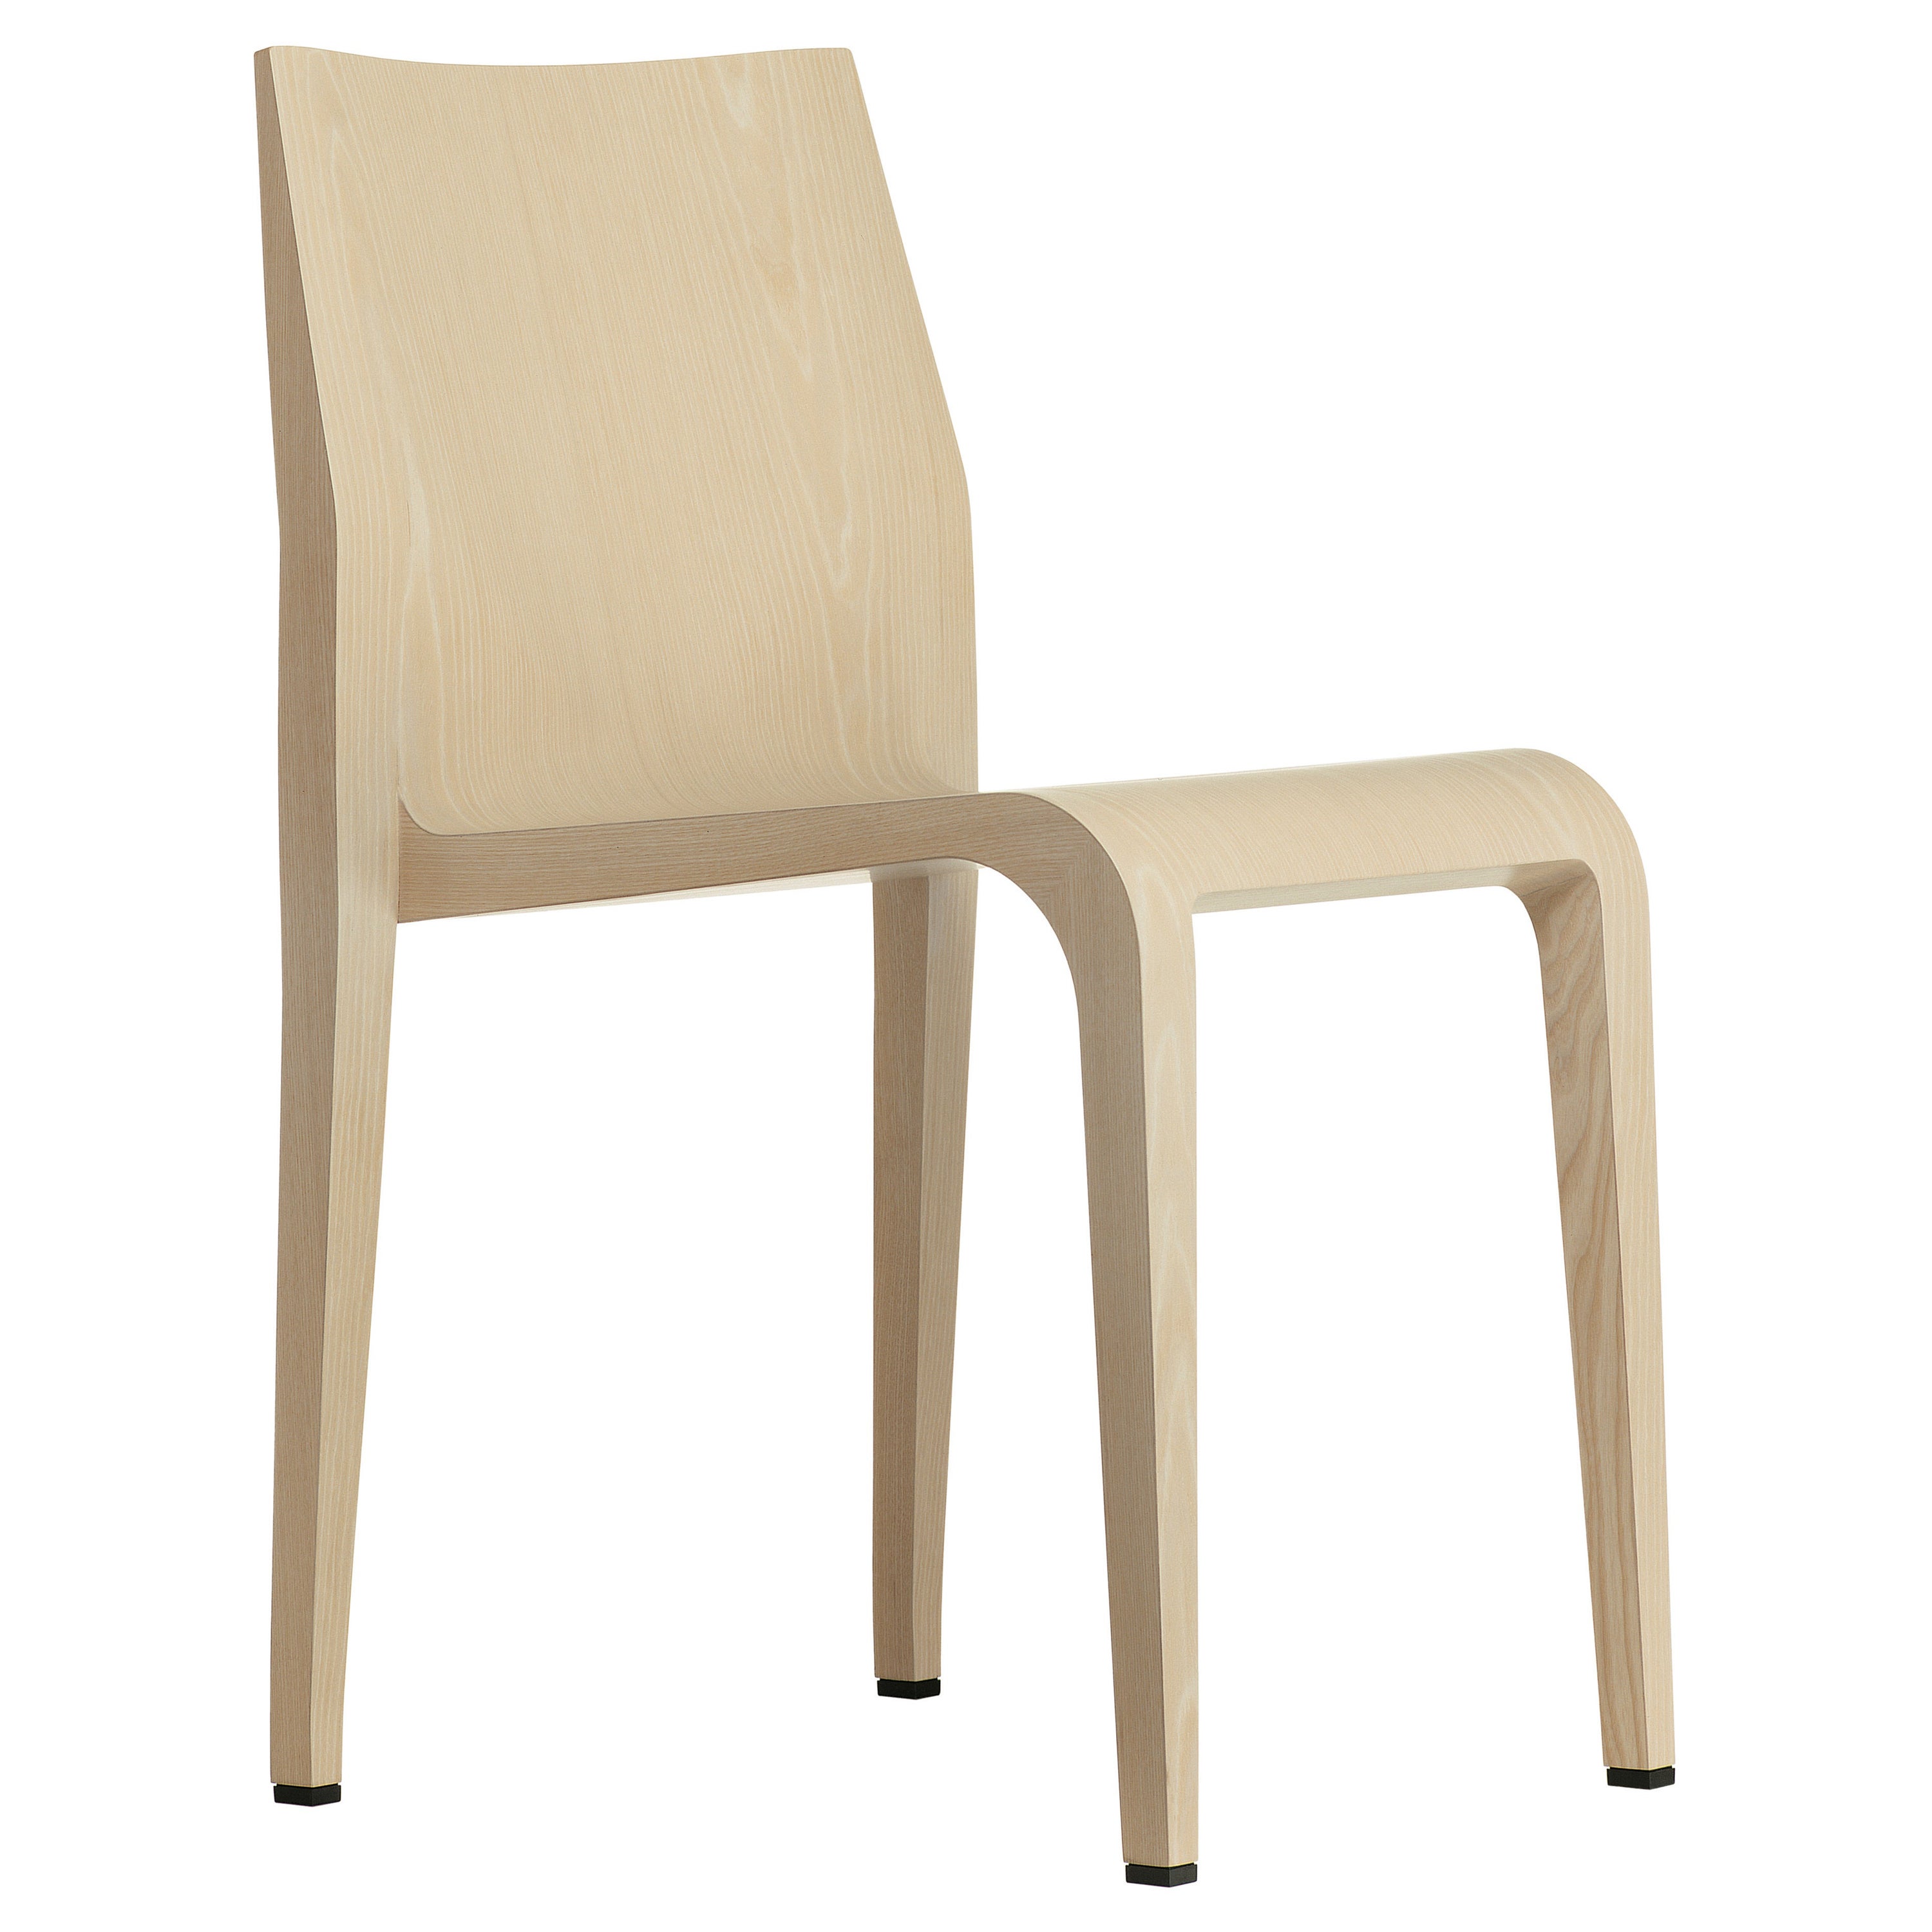 Alias 301 Laleggera Chair in Whitened Oak Wood by Riccardo Blumer